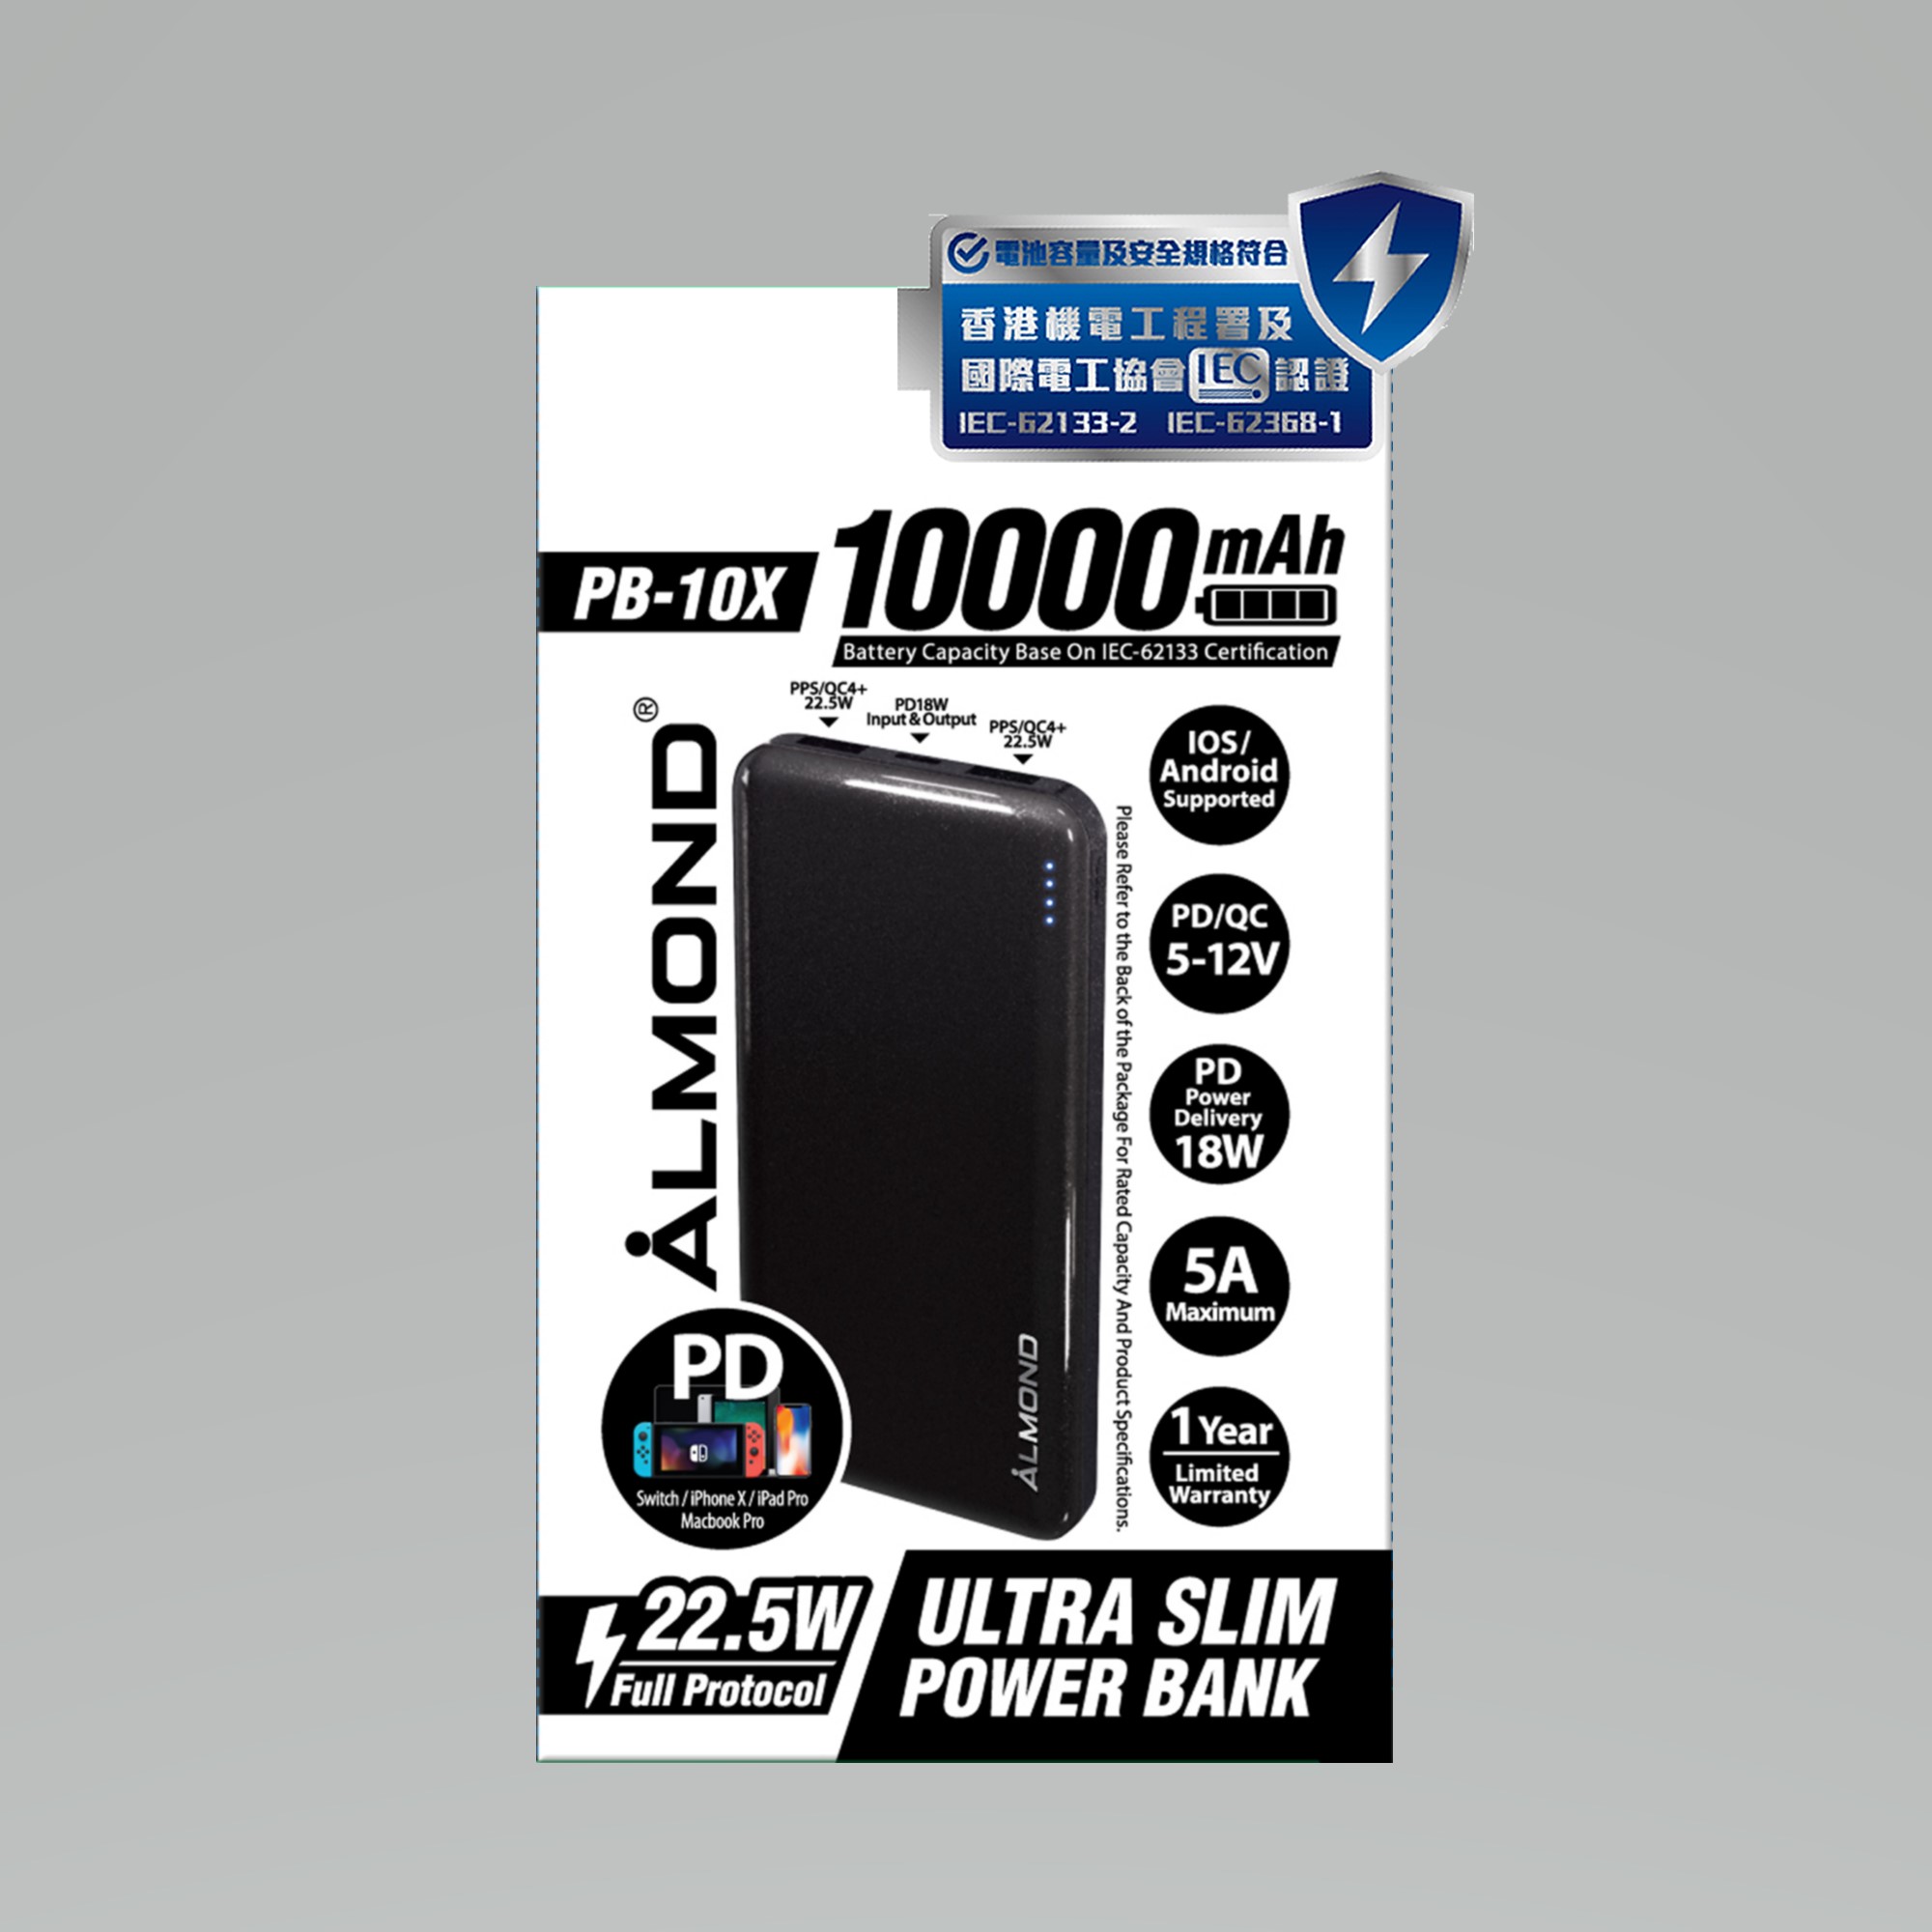 ALMOND PB-10X 10000mAh Powerbank - Black, Black, large image number 1